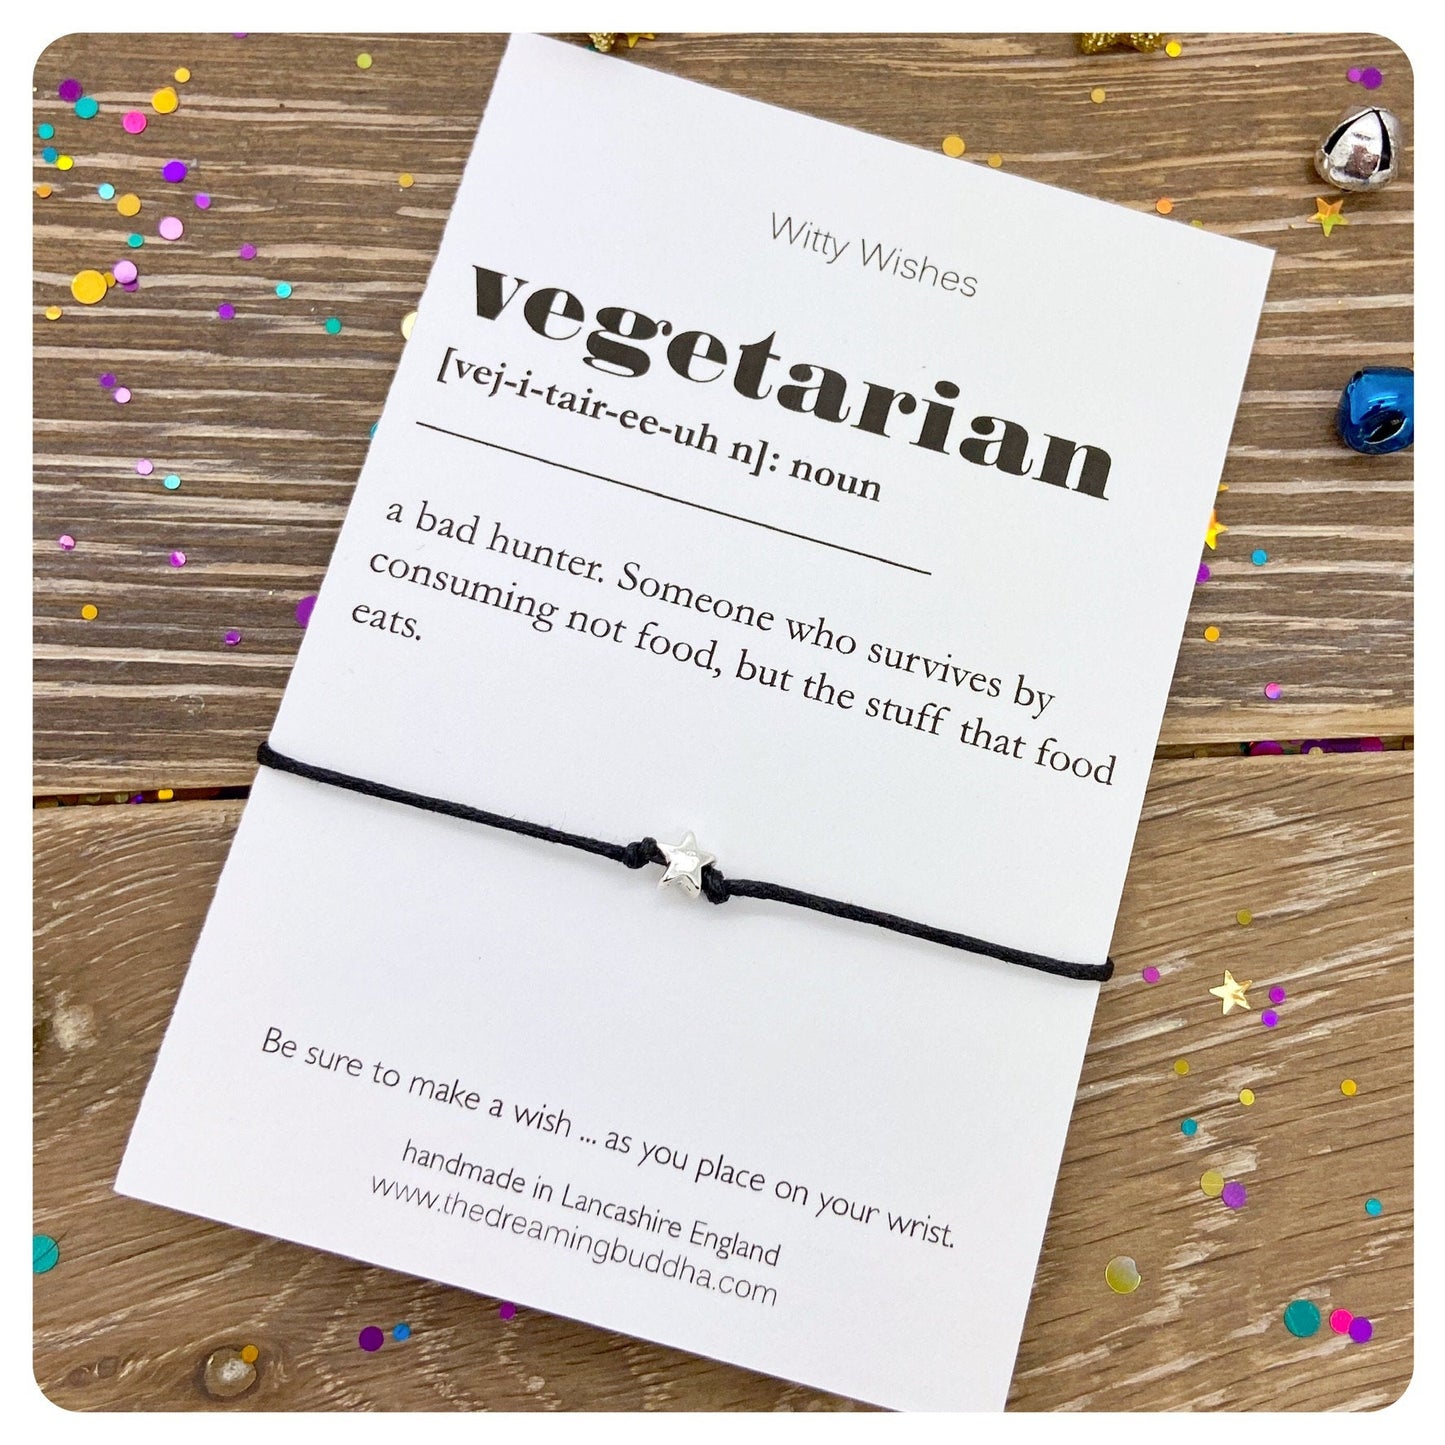 Vegetarian Dictionary Definition, Vegetarian Wish Bracelet, Veggie Present, Quirky Gift